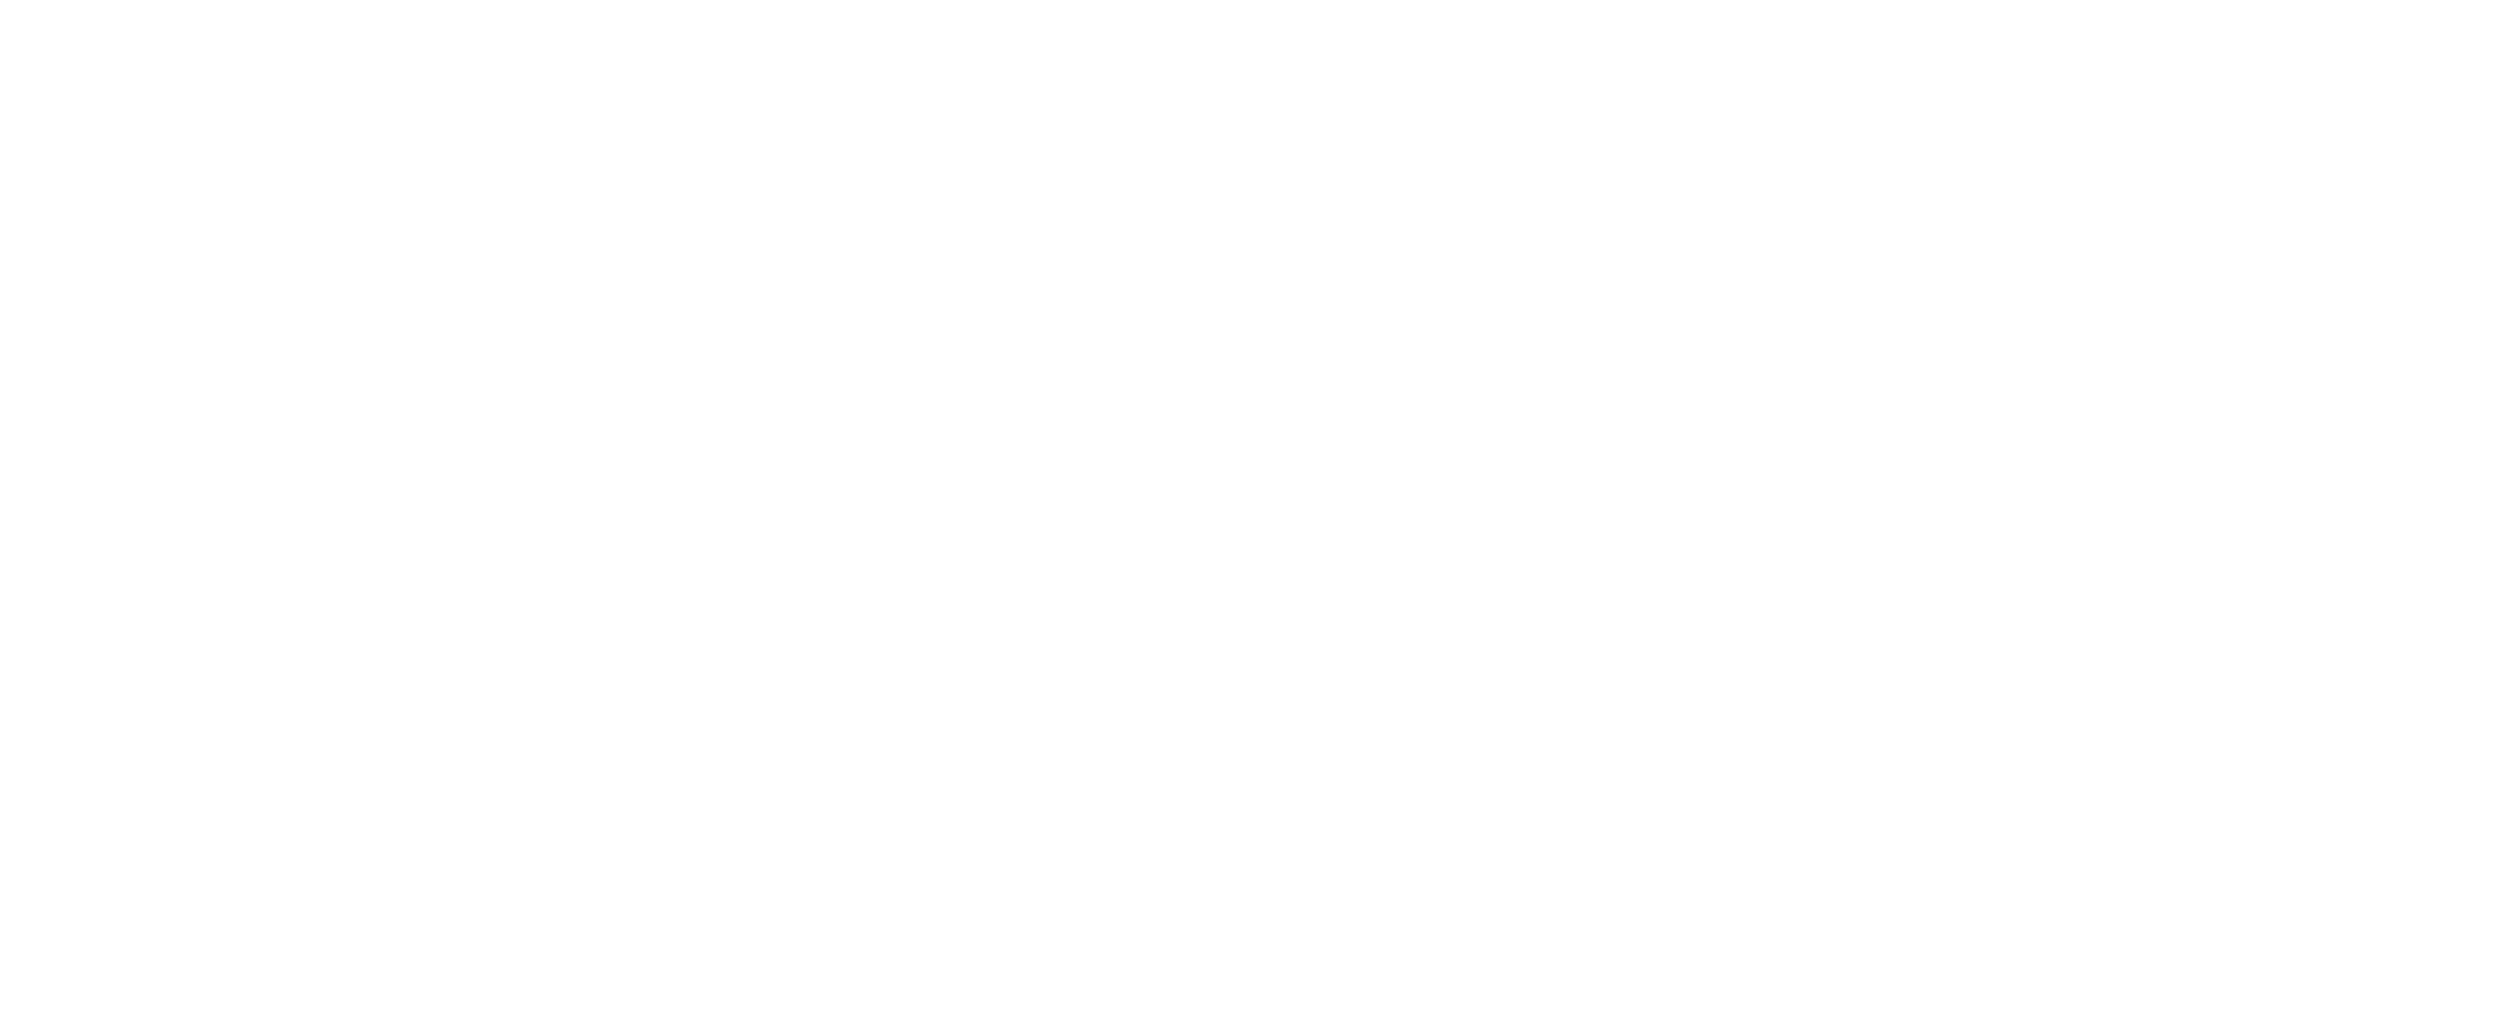 SHORT FILMS Official Selection_zinebi61 copy.png